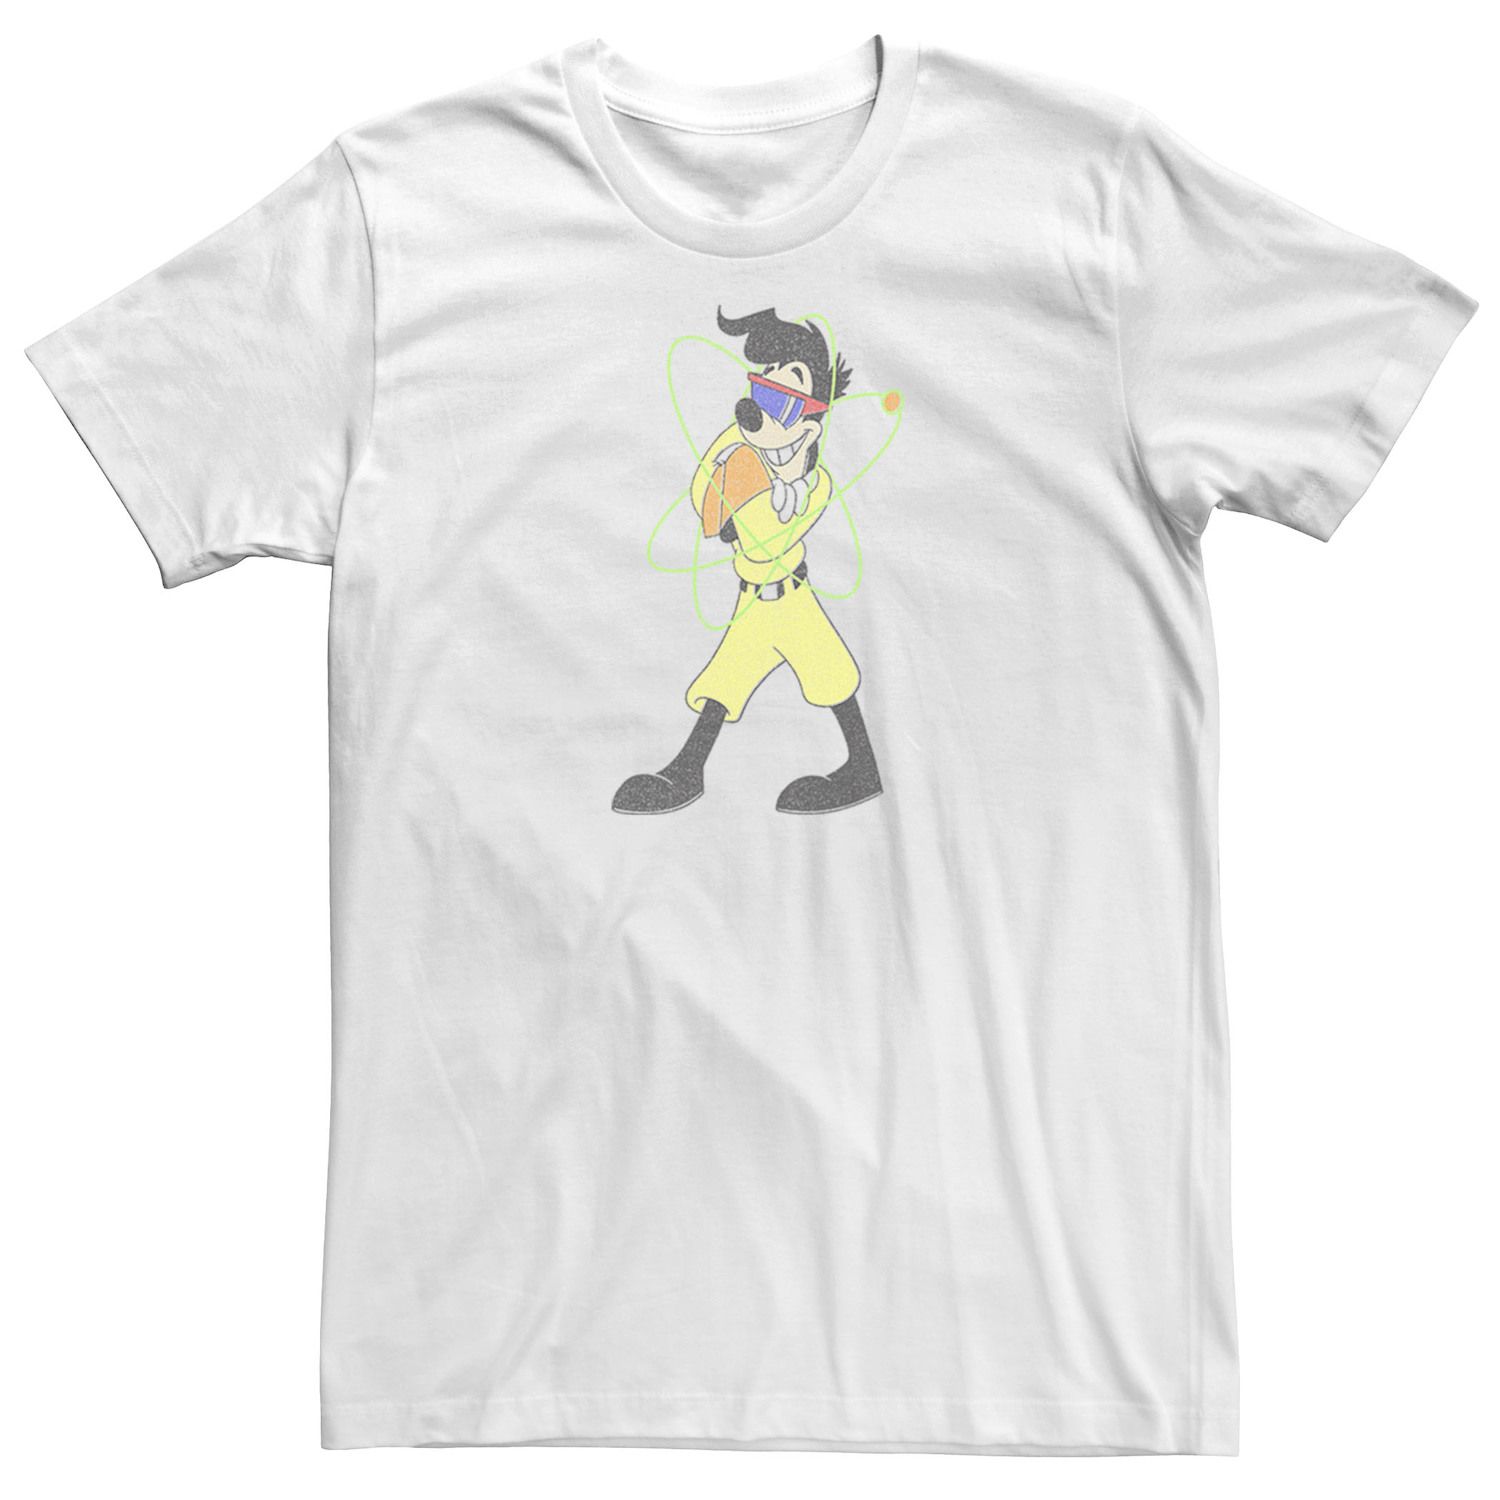 Мужская футболка Powerline с портретом Disney A Goofy Movie Licensed Character